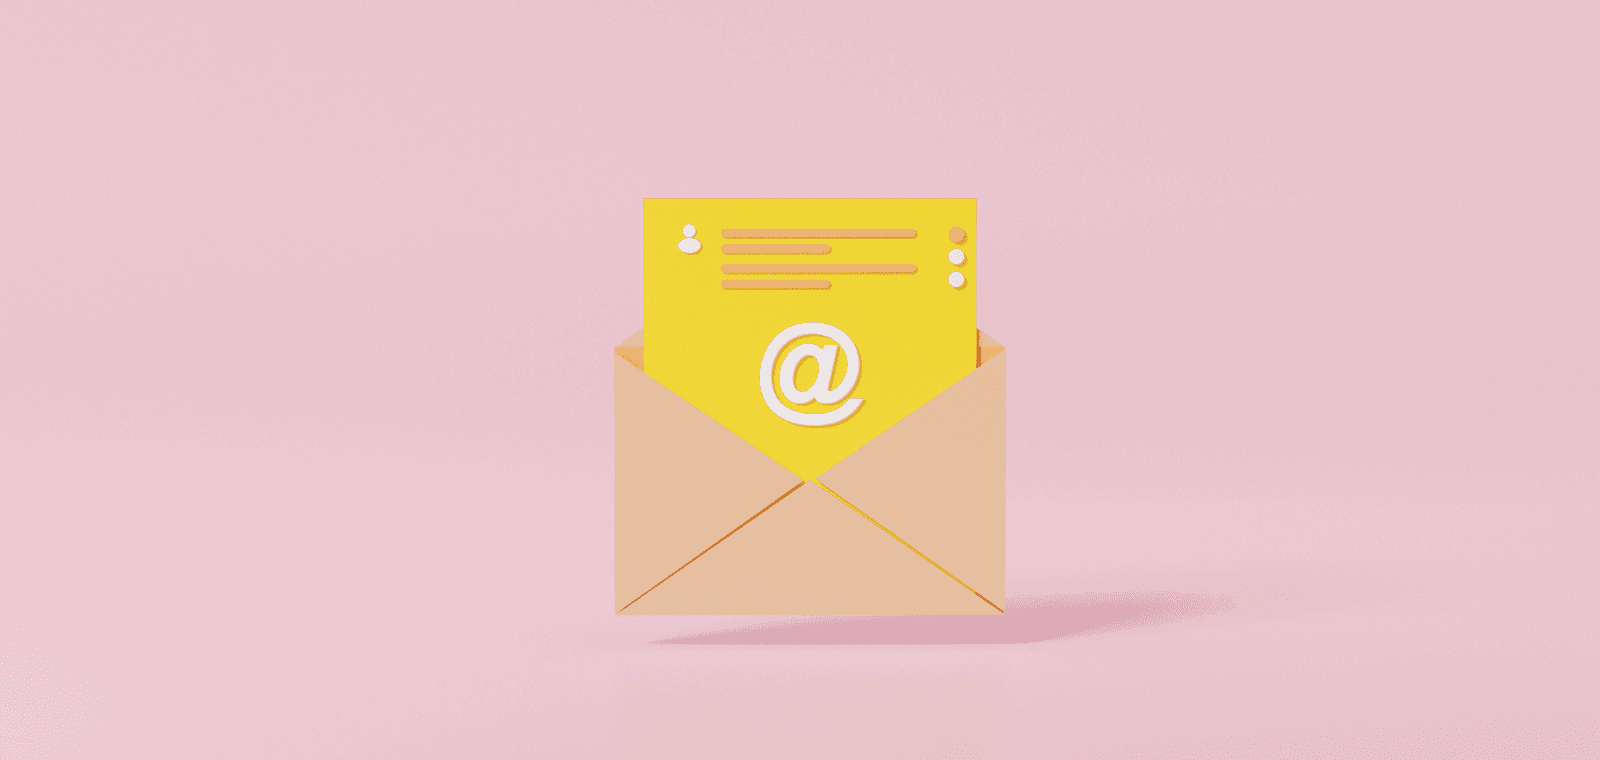 Créer une campagne d'emailing efficace